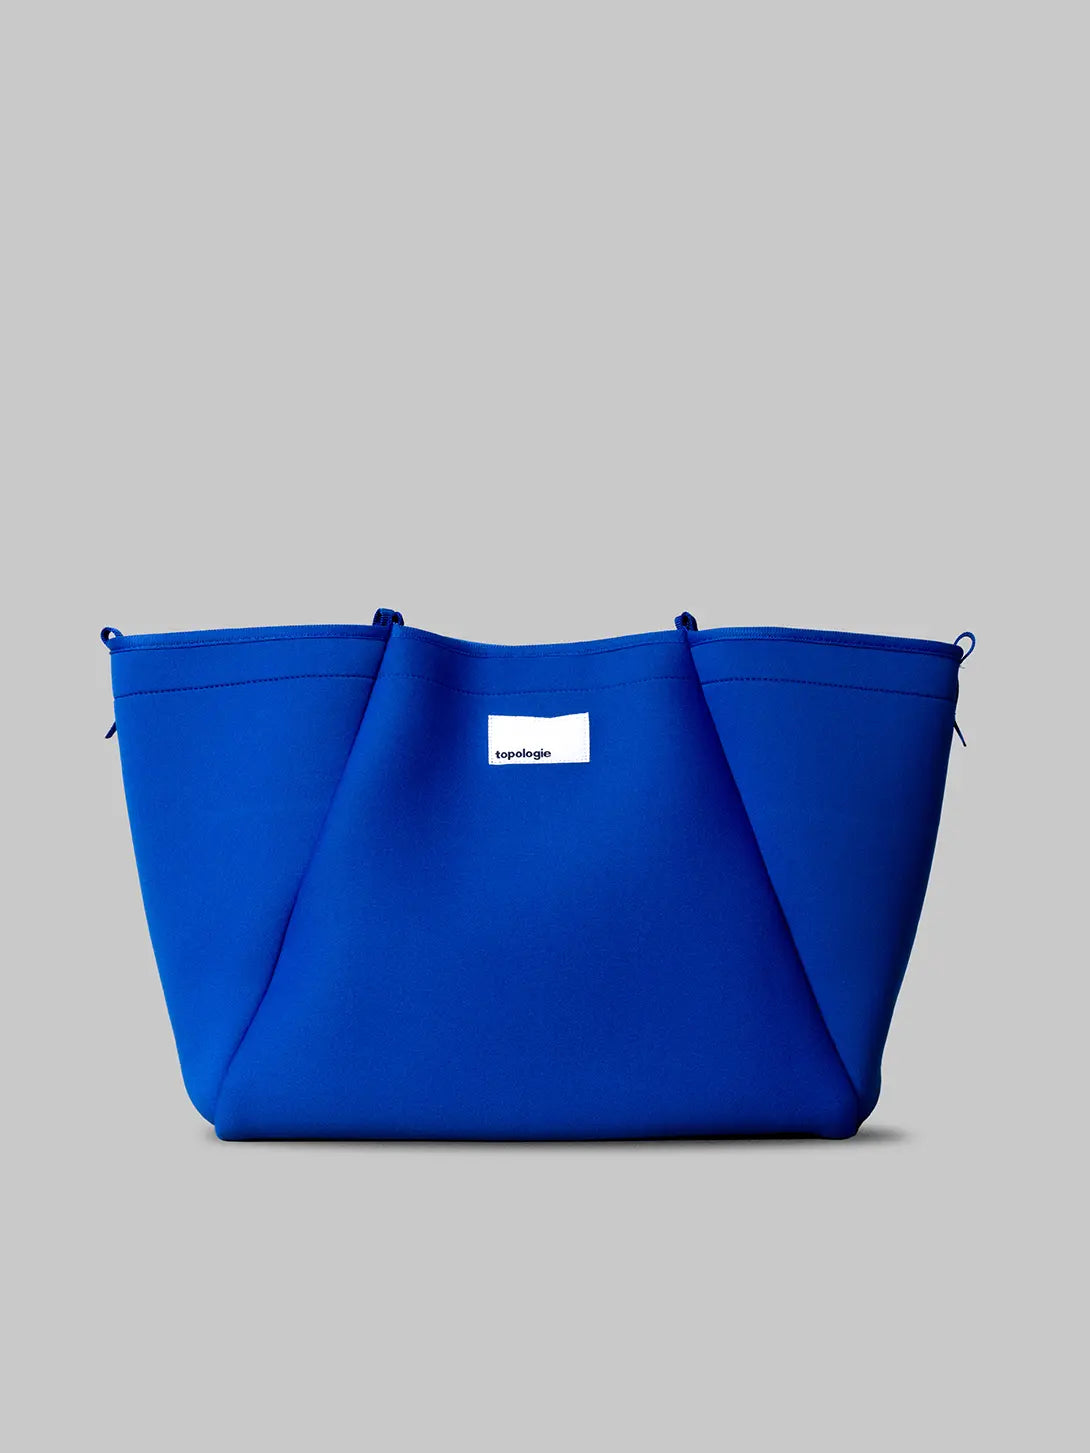 Future Blue Topologie Loop Shopper Tote Bag